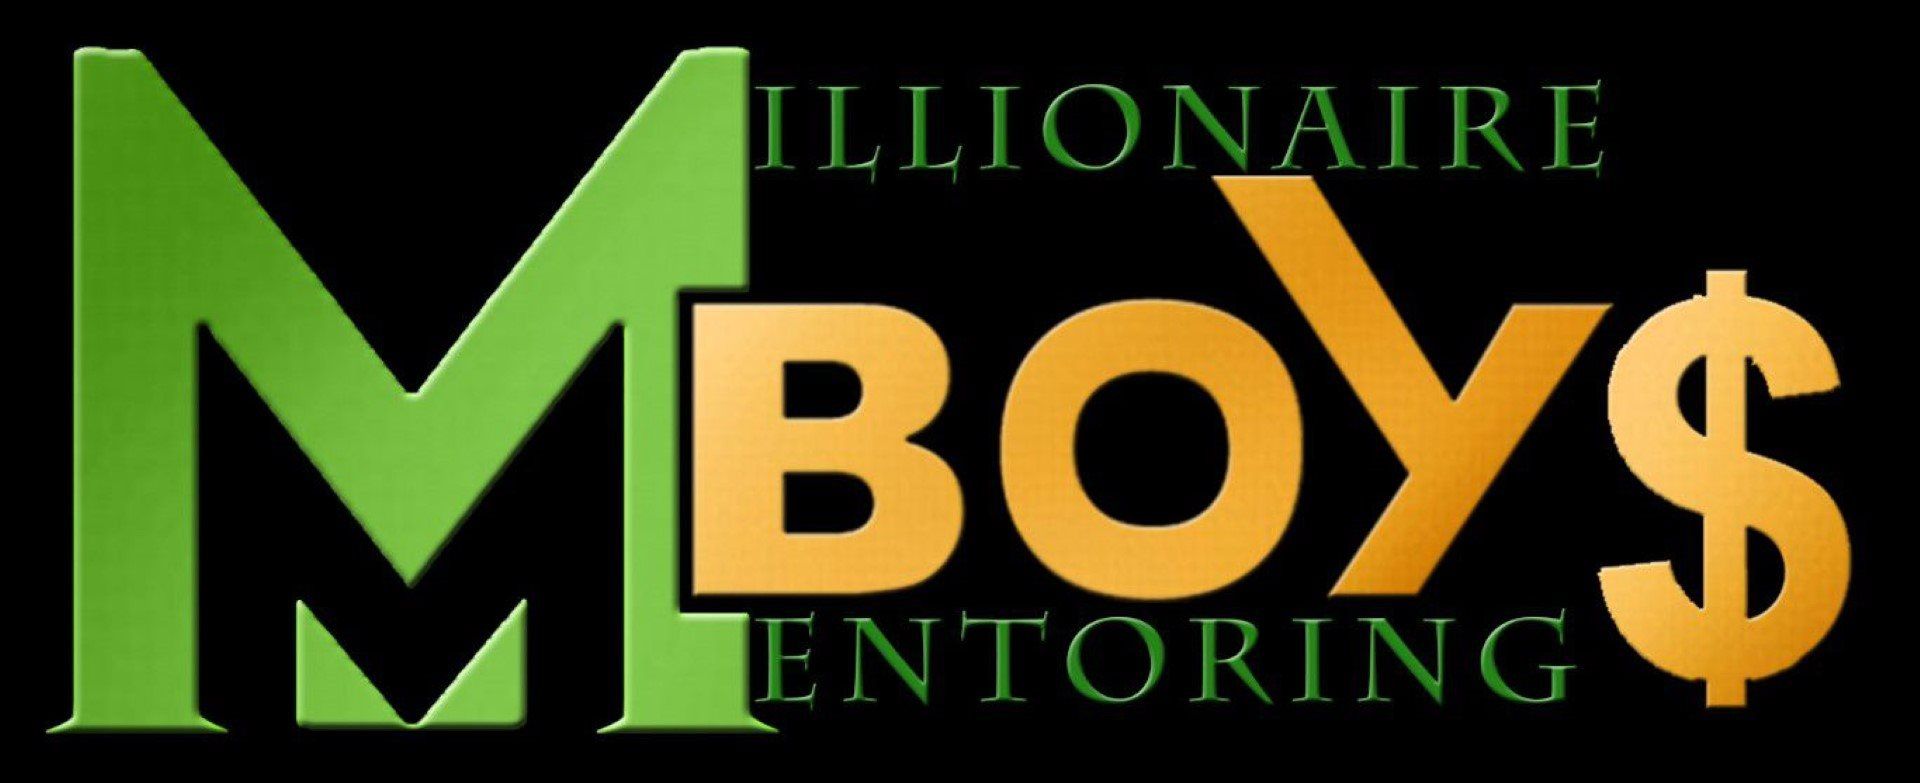 millionaire boys mentoring